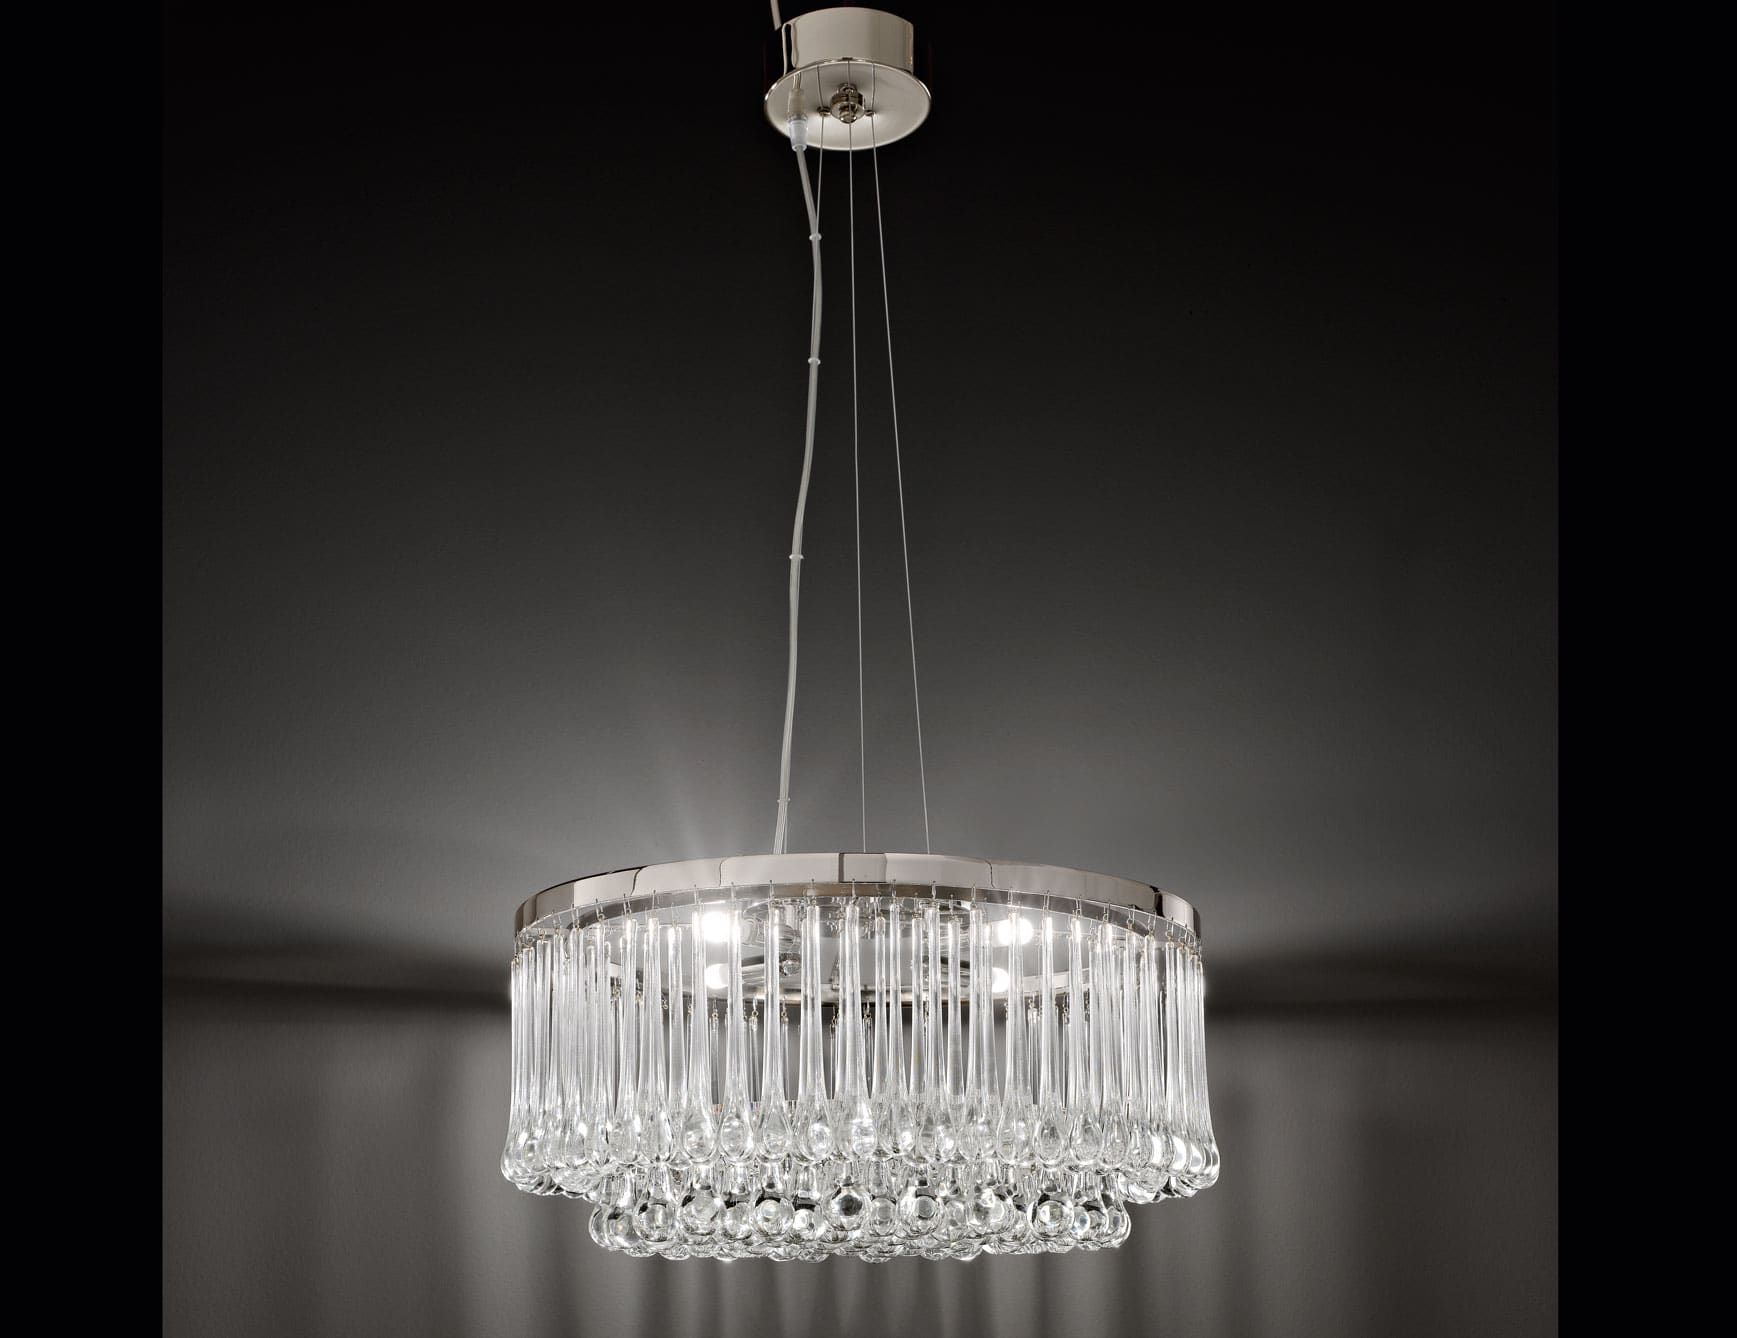 Alda modern Italian chandelier with clear glass